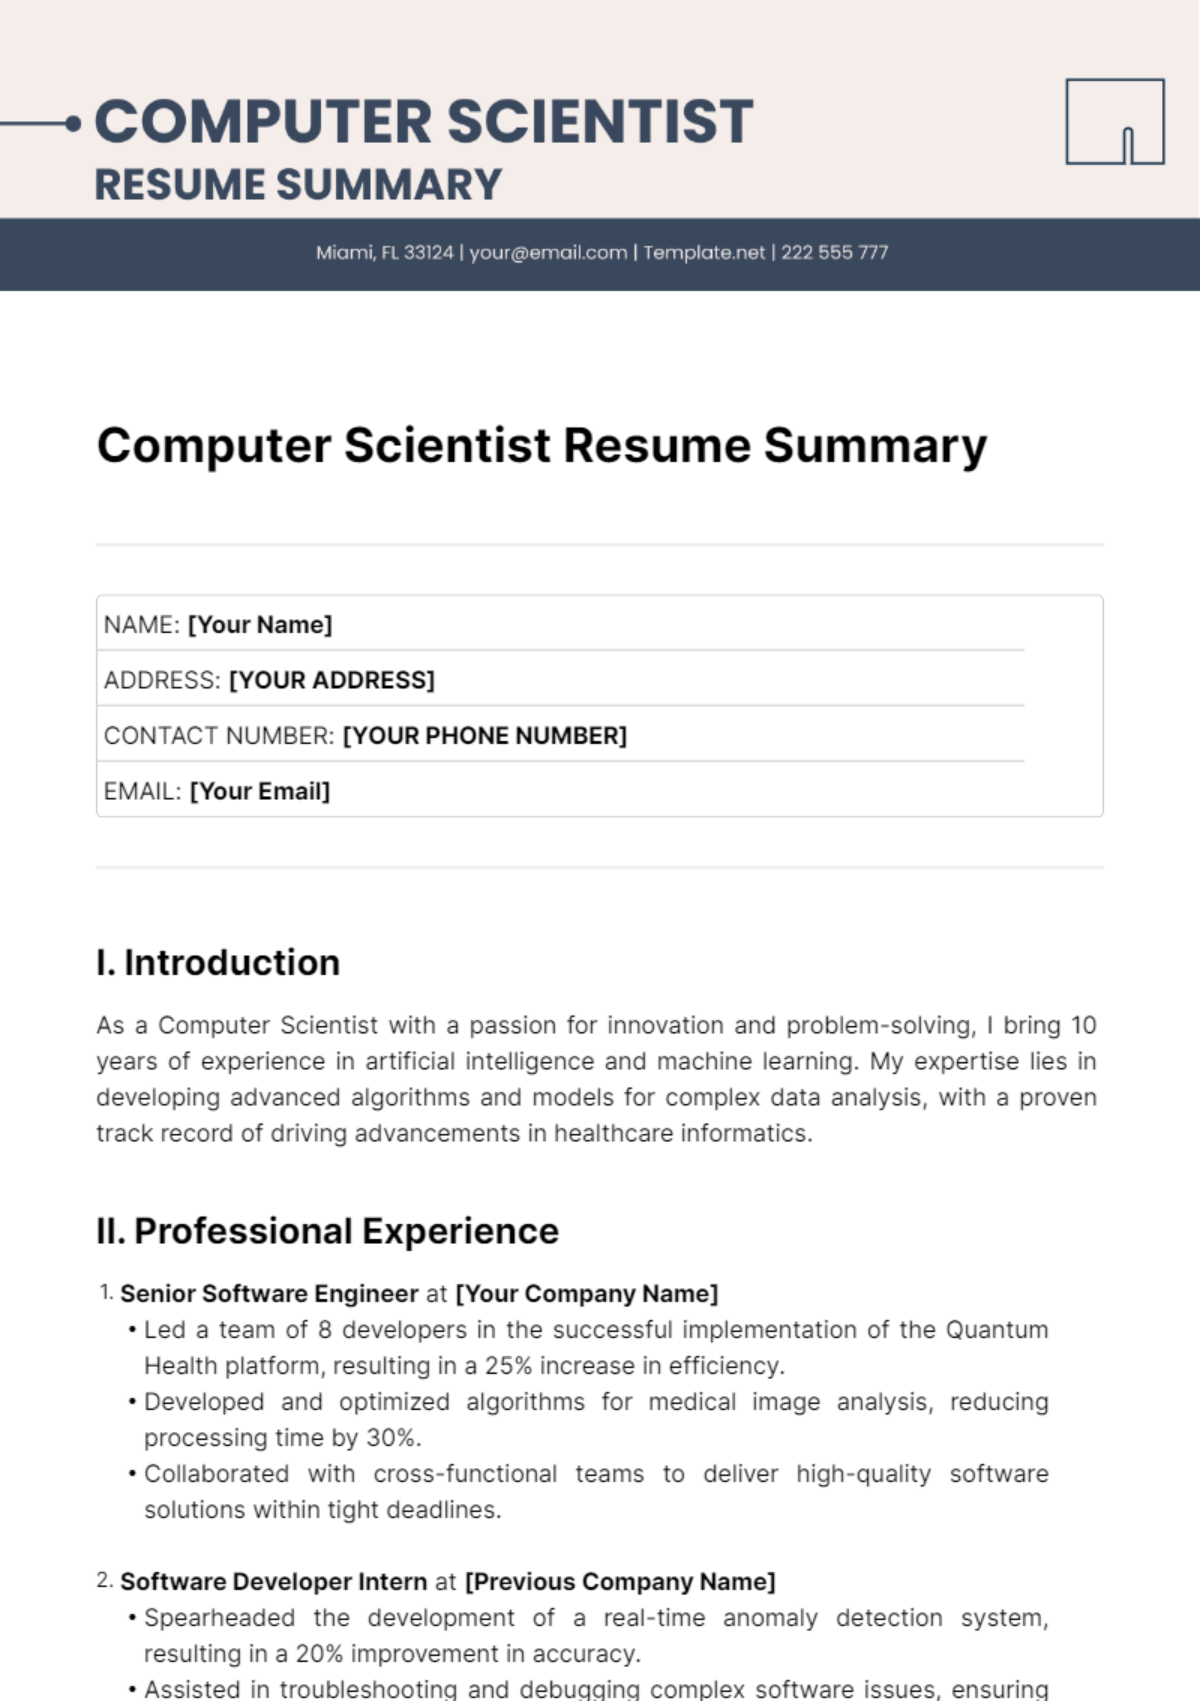 Free Computer Scientist Resume Summary Template